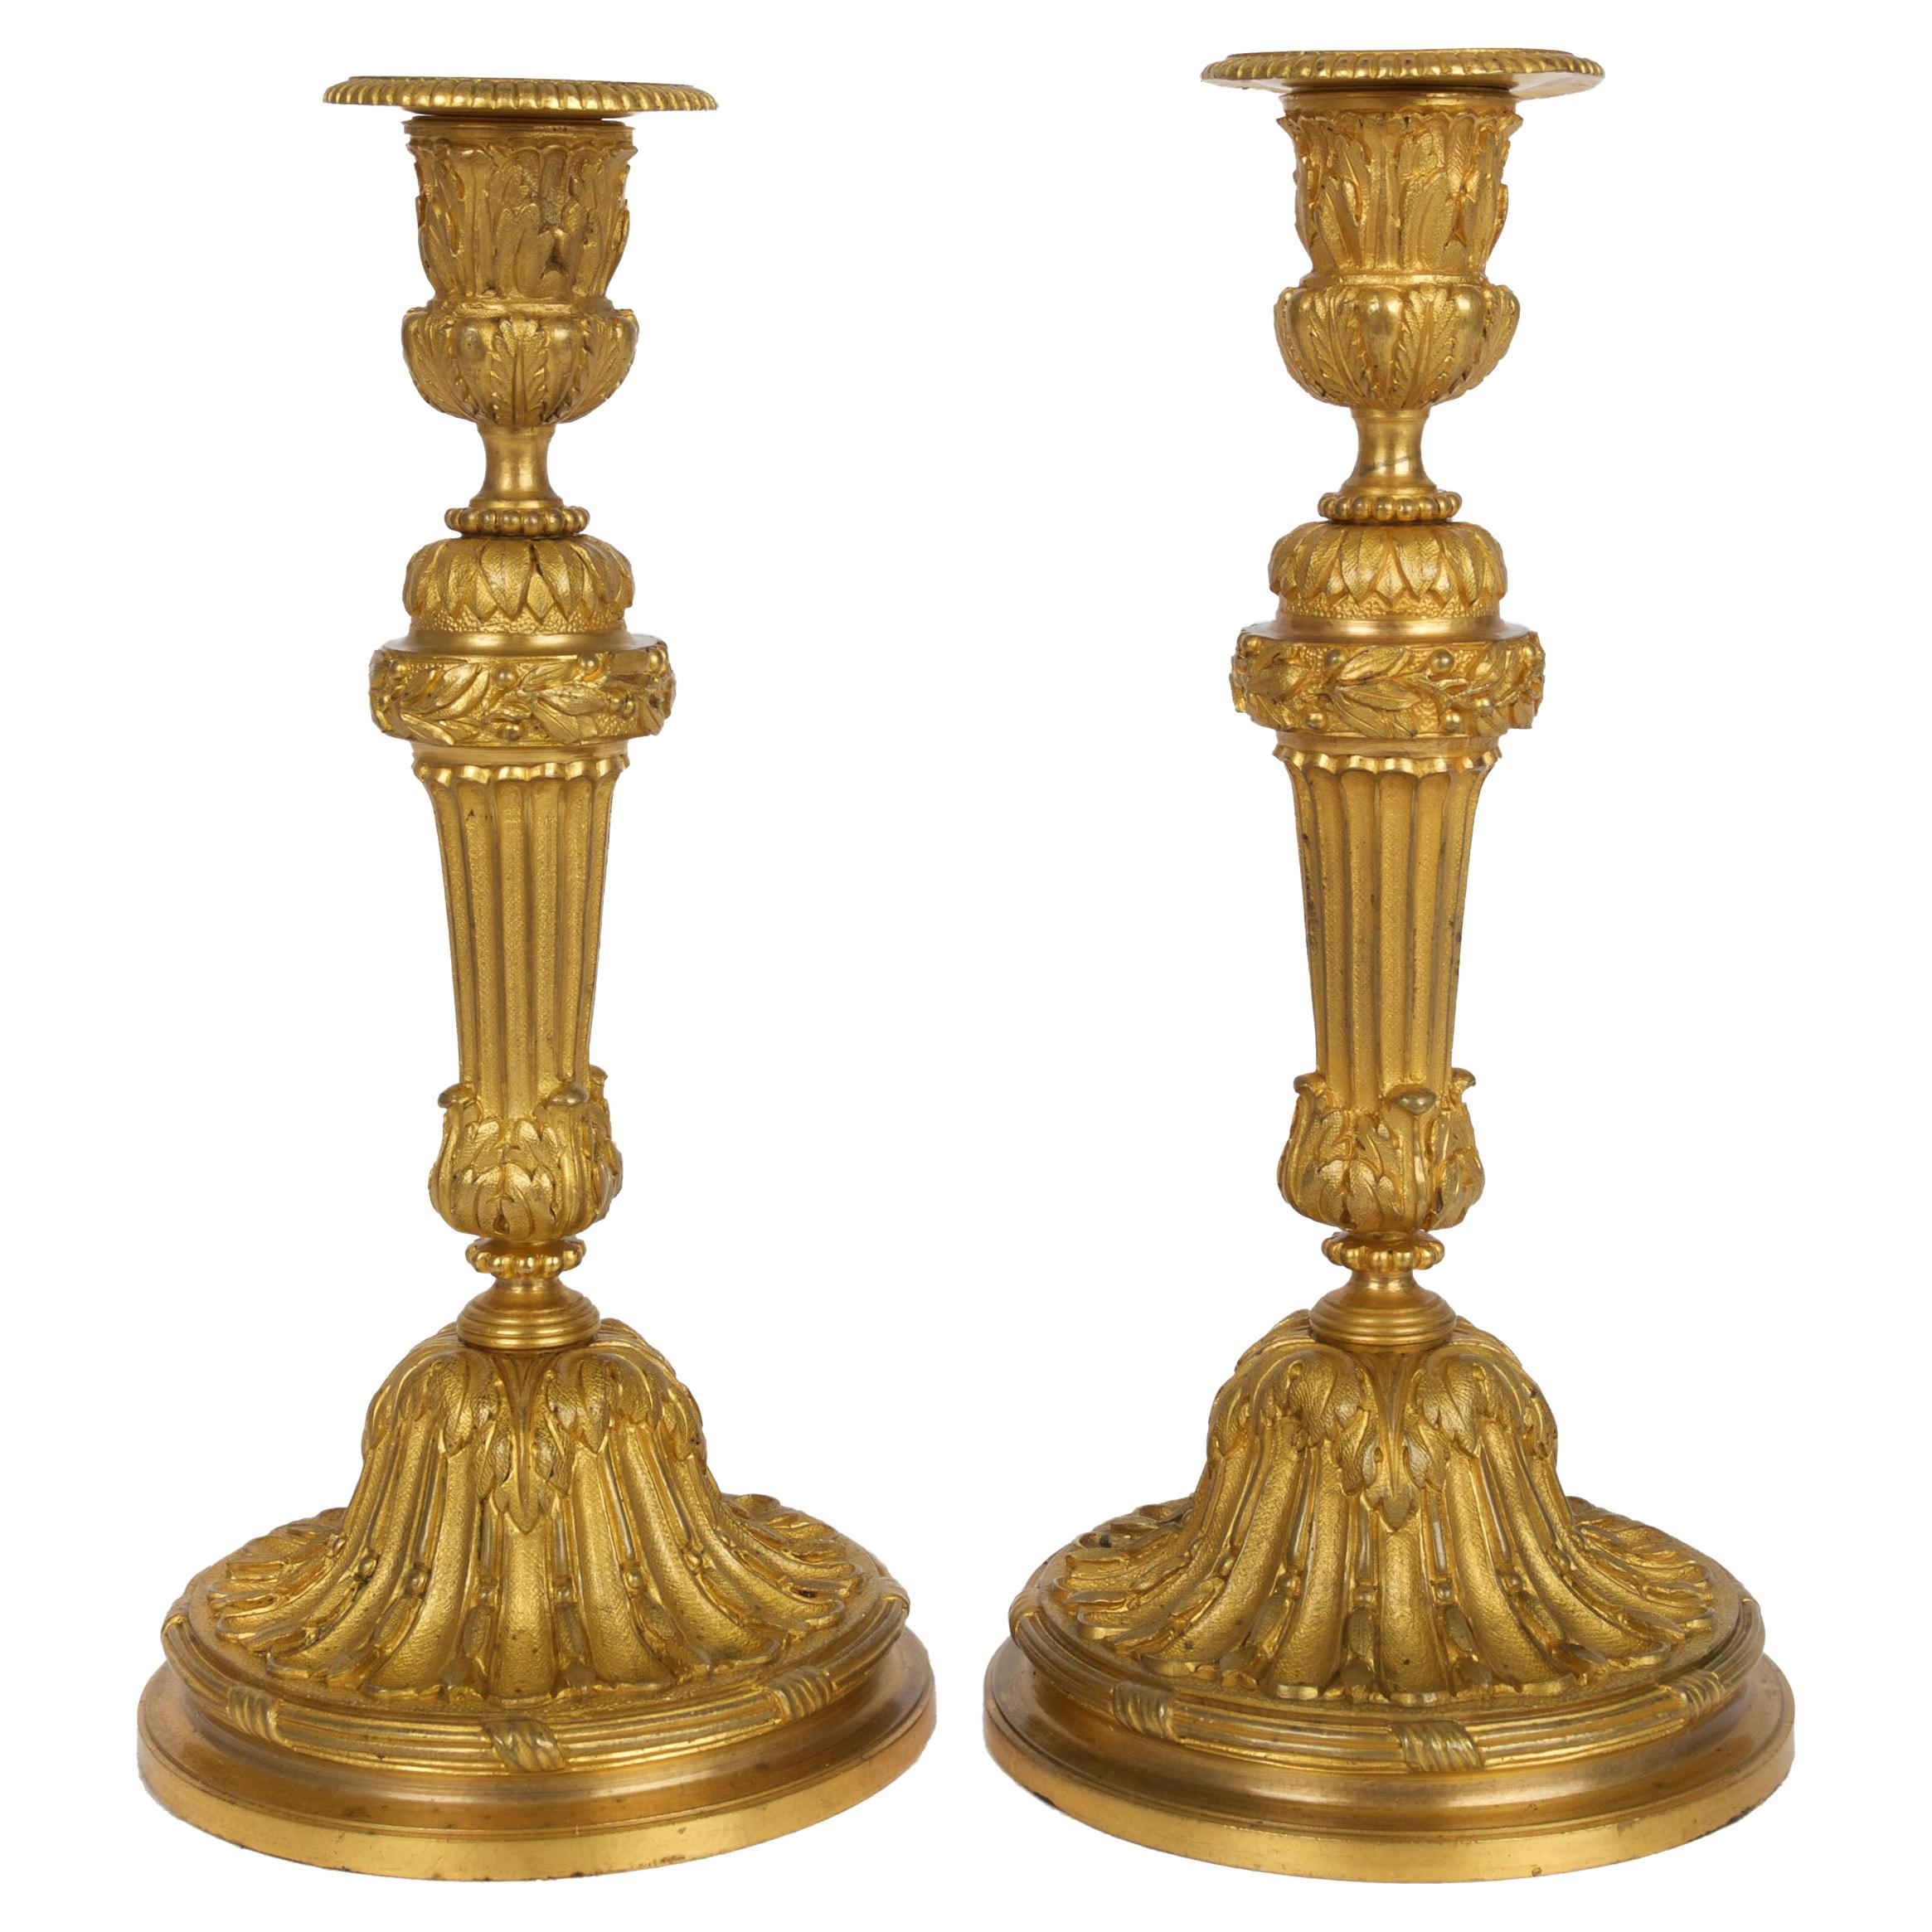 Pair of French Louis XVI Style Gilt Ormolu Bronze Candlesticks, 19th Century